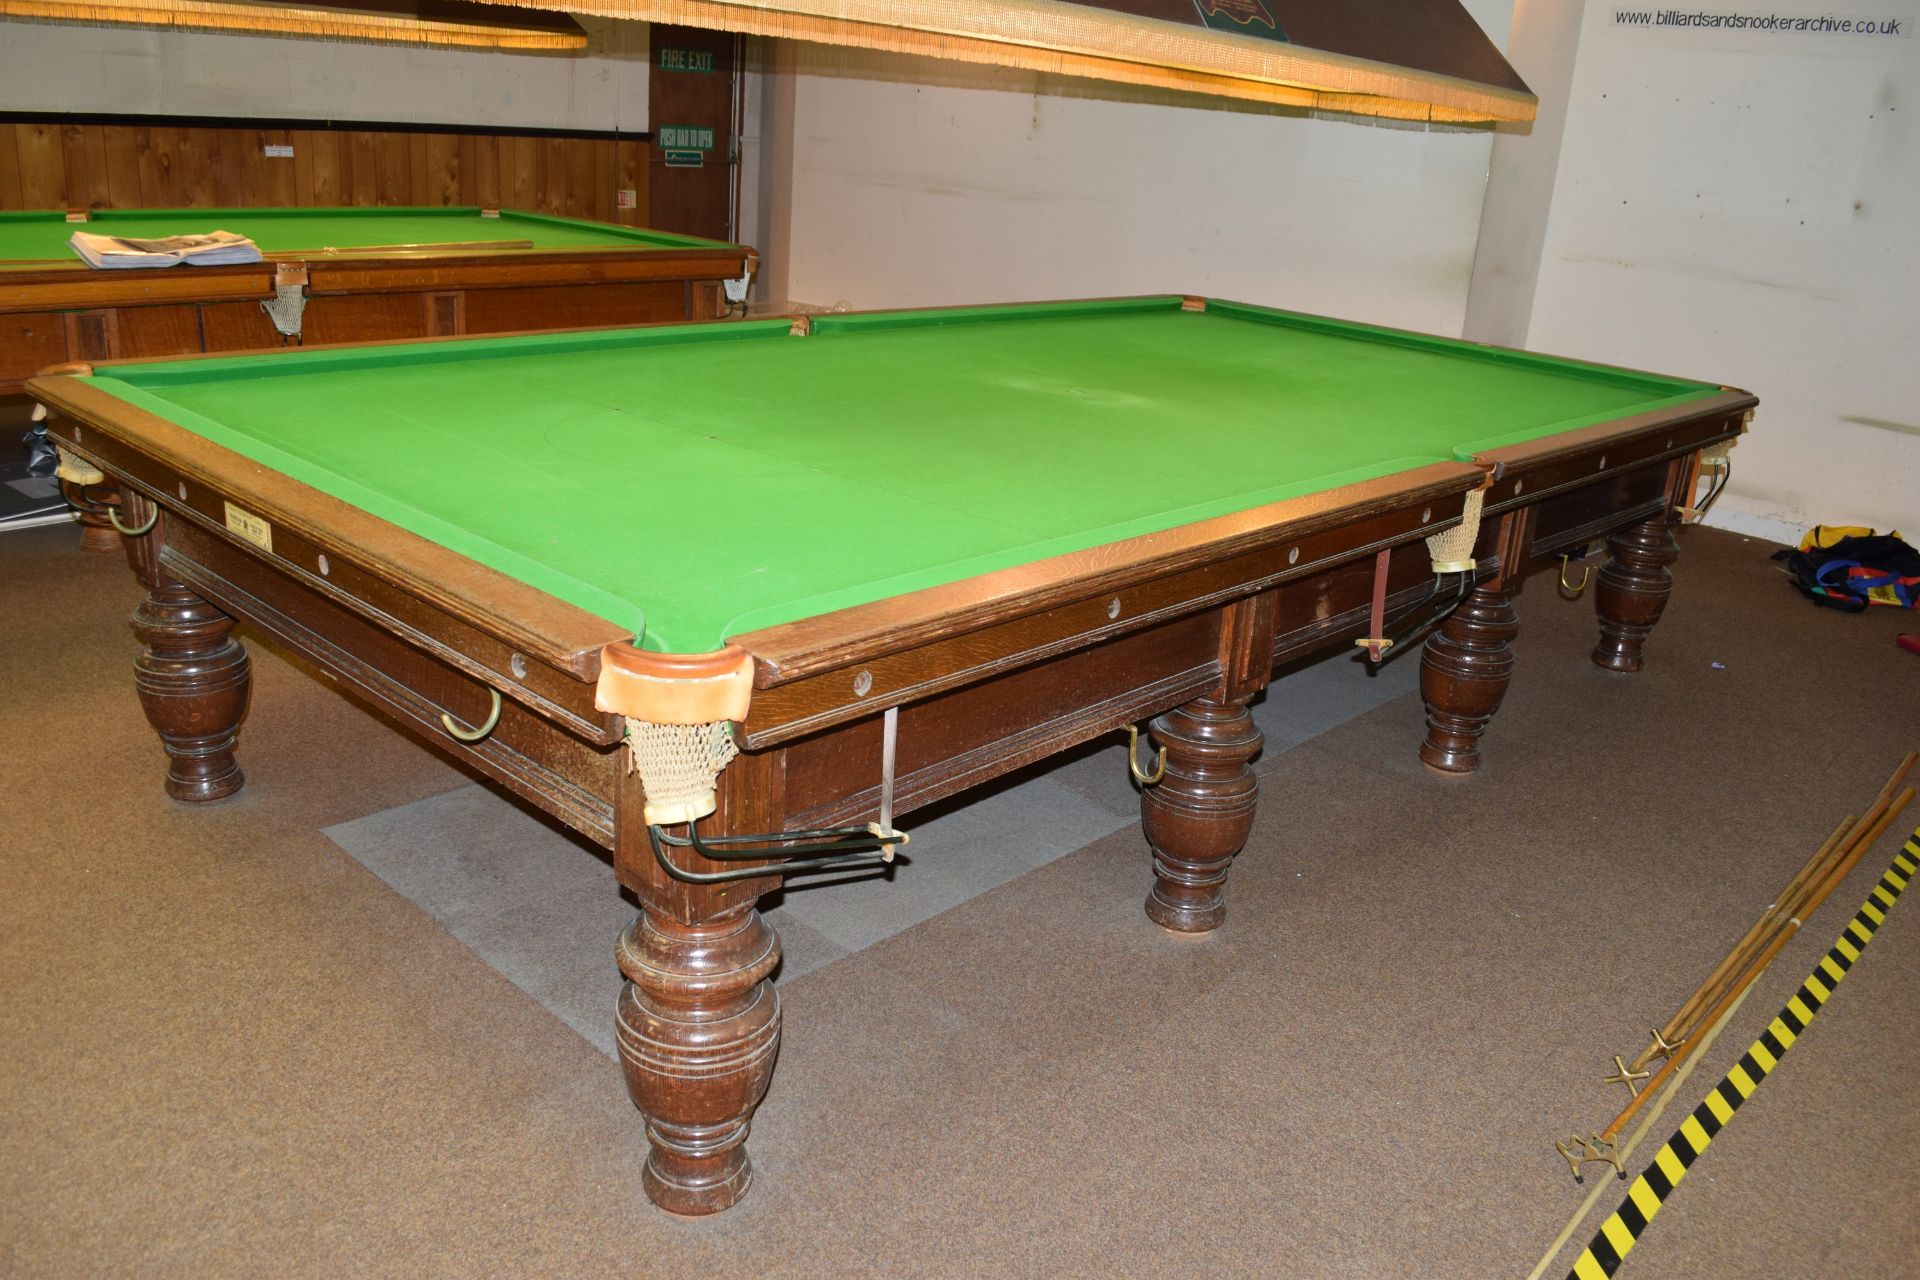 Thurston & Co full size billiards table